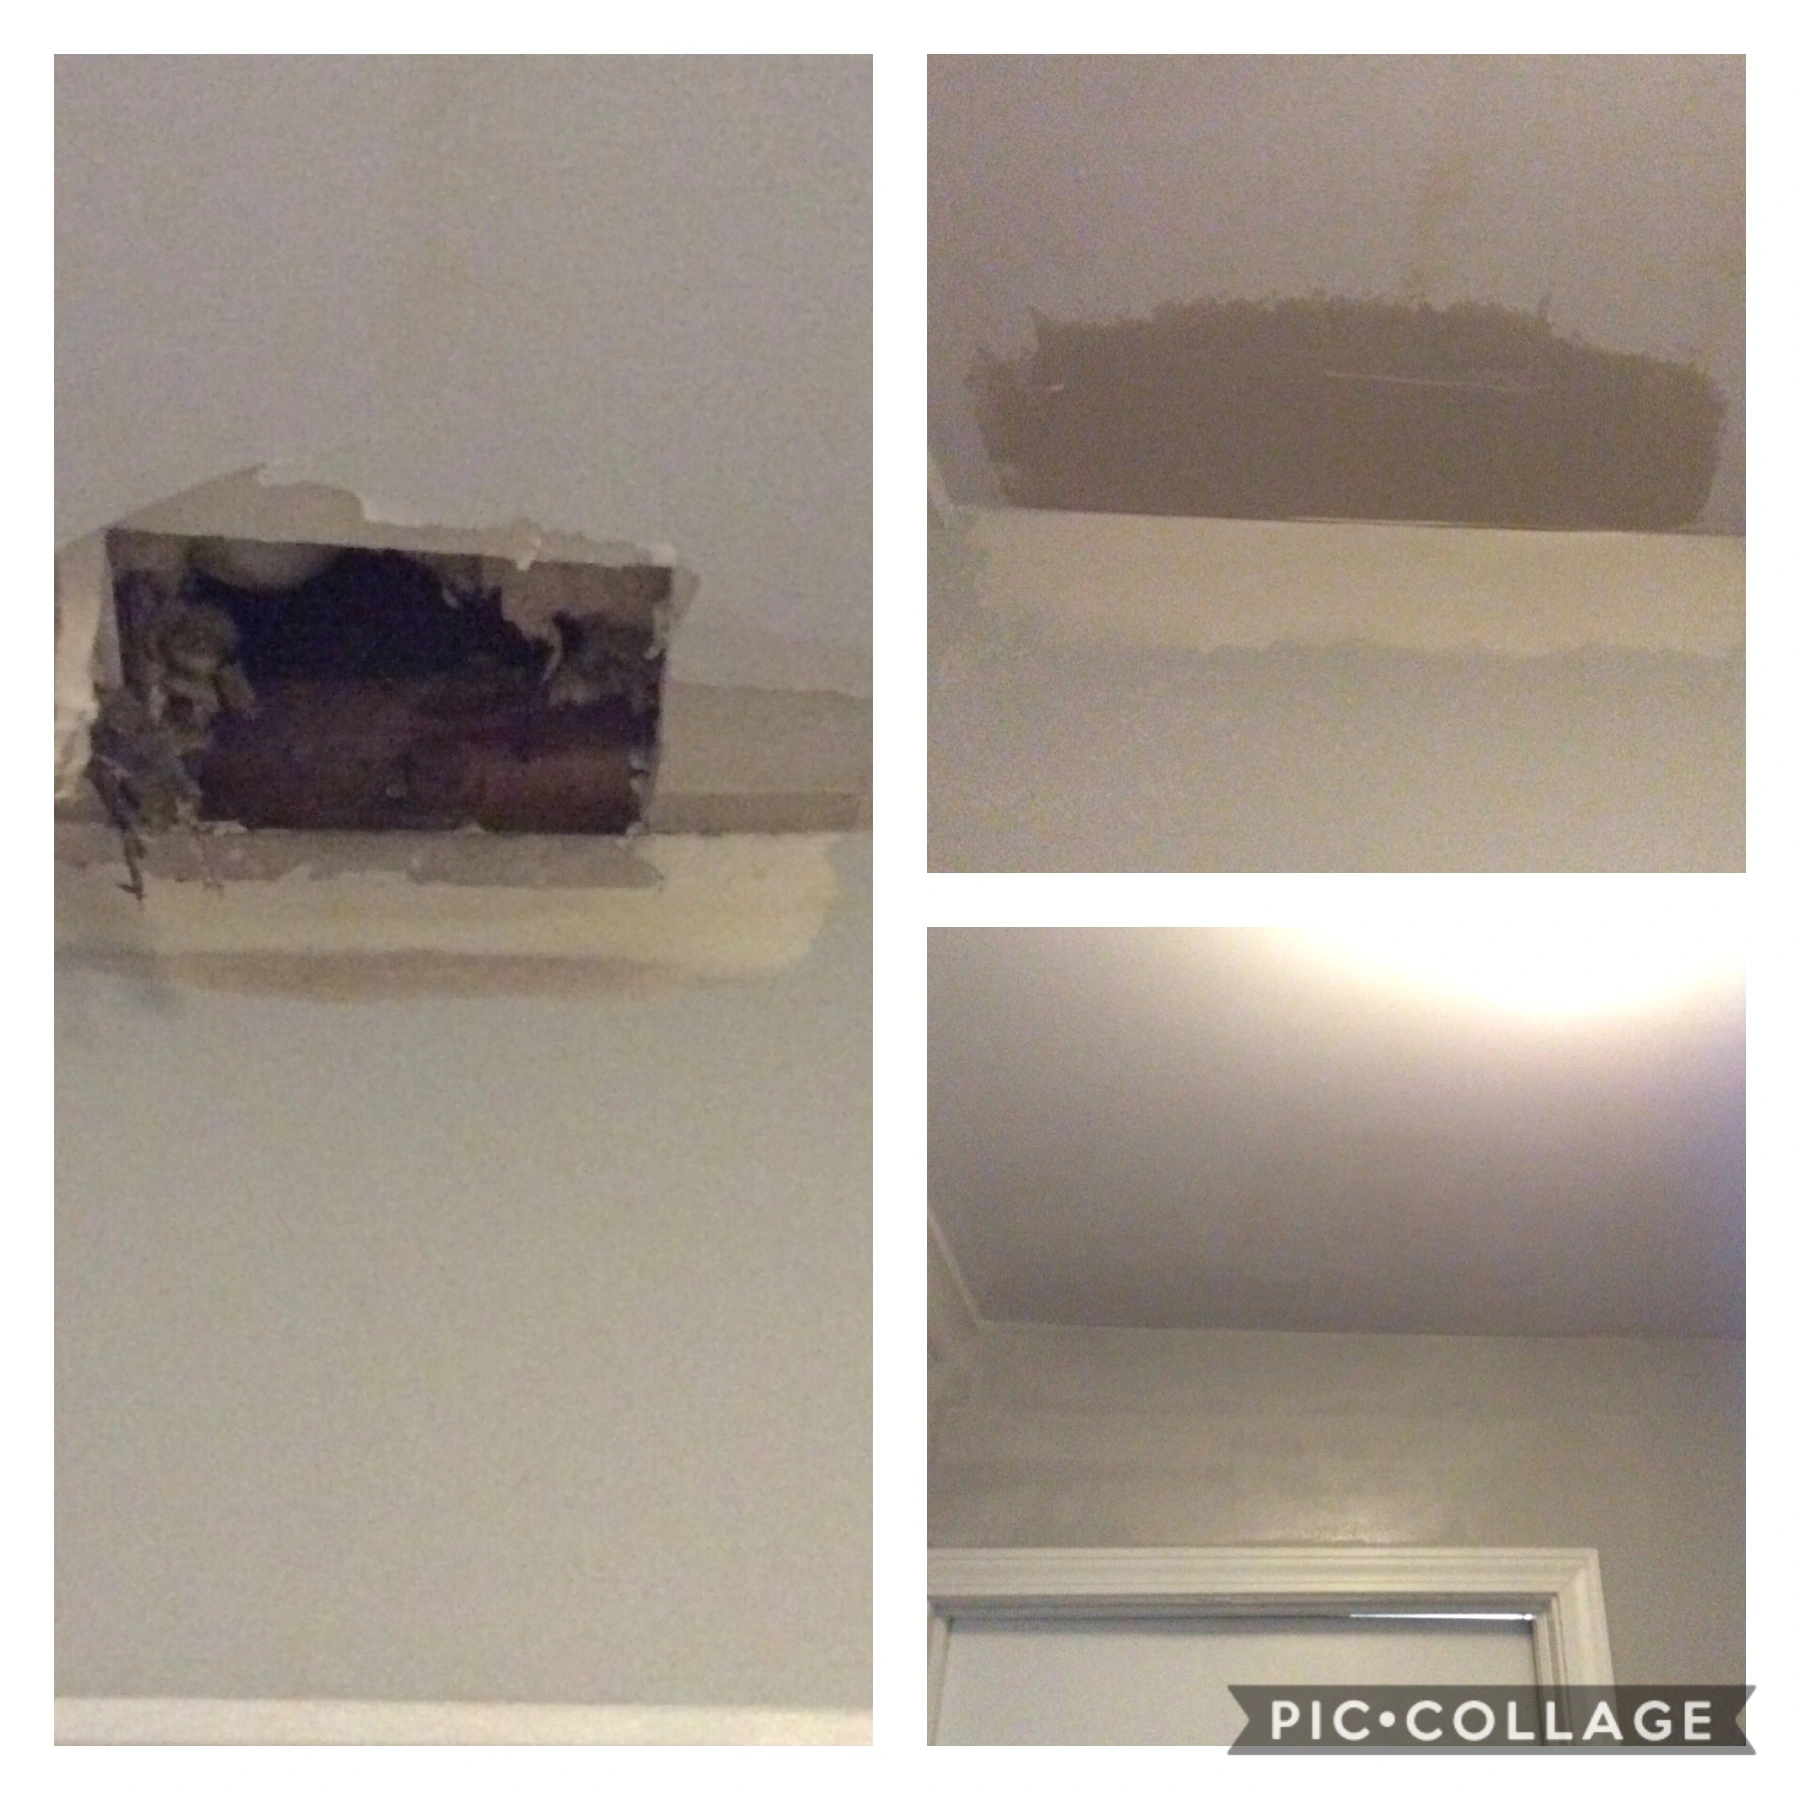 Drywall Damage Repair Mr. Handyman of Wheaton-Hinsdale, IL